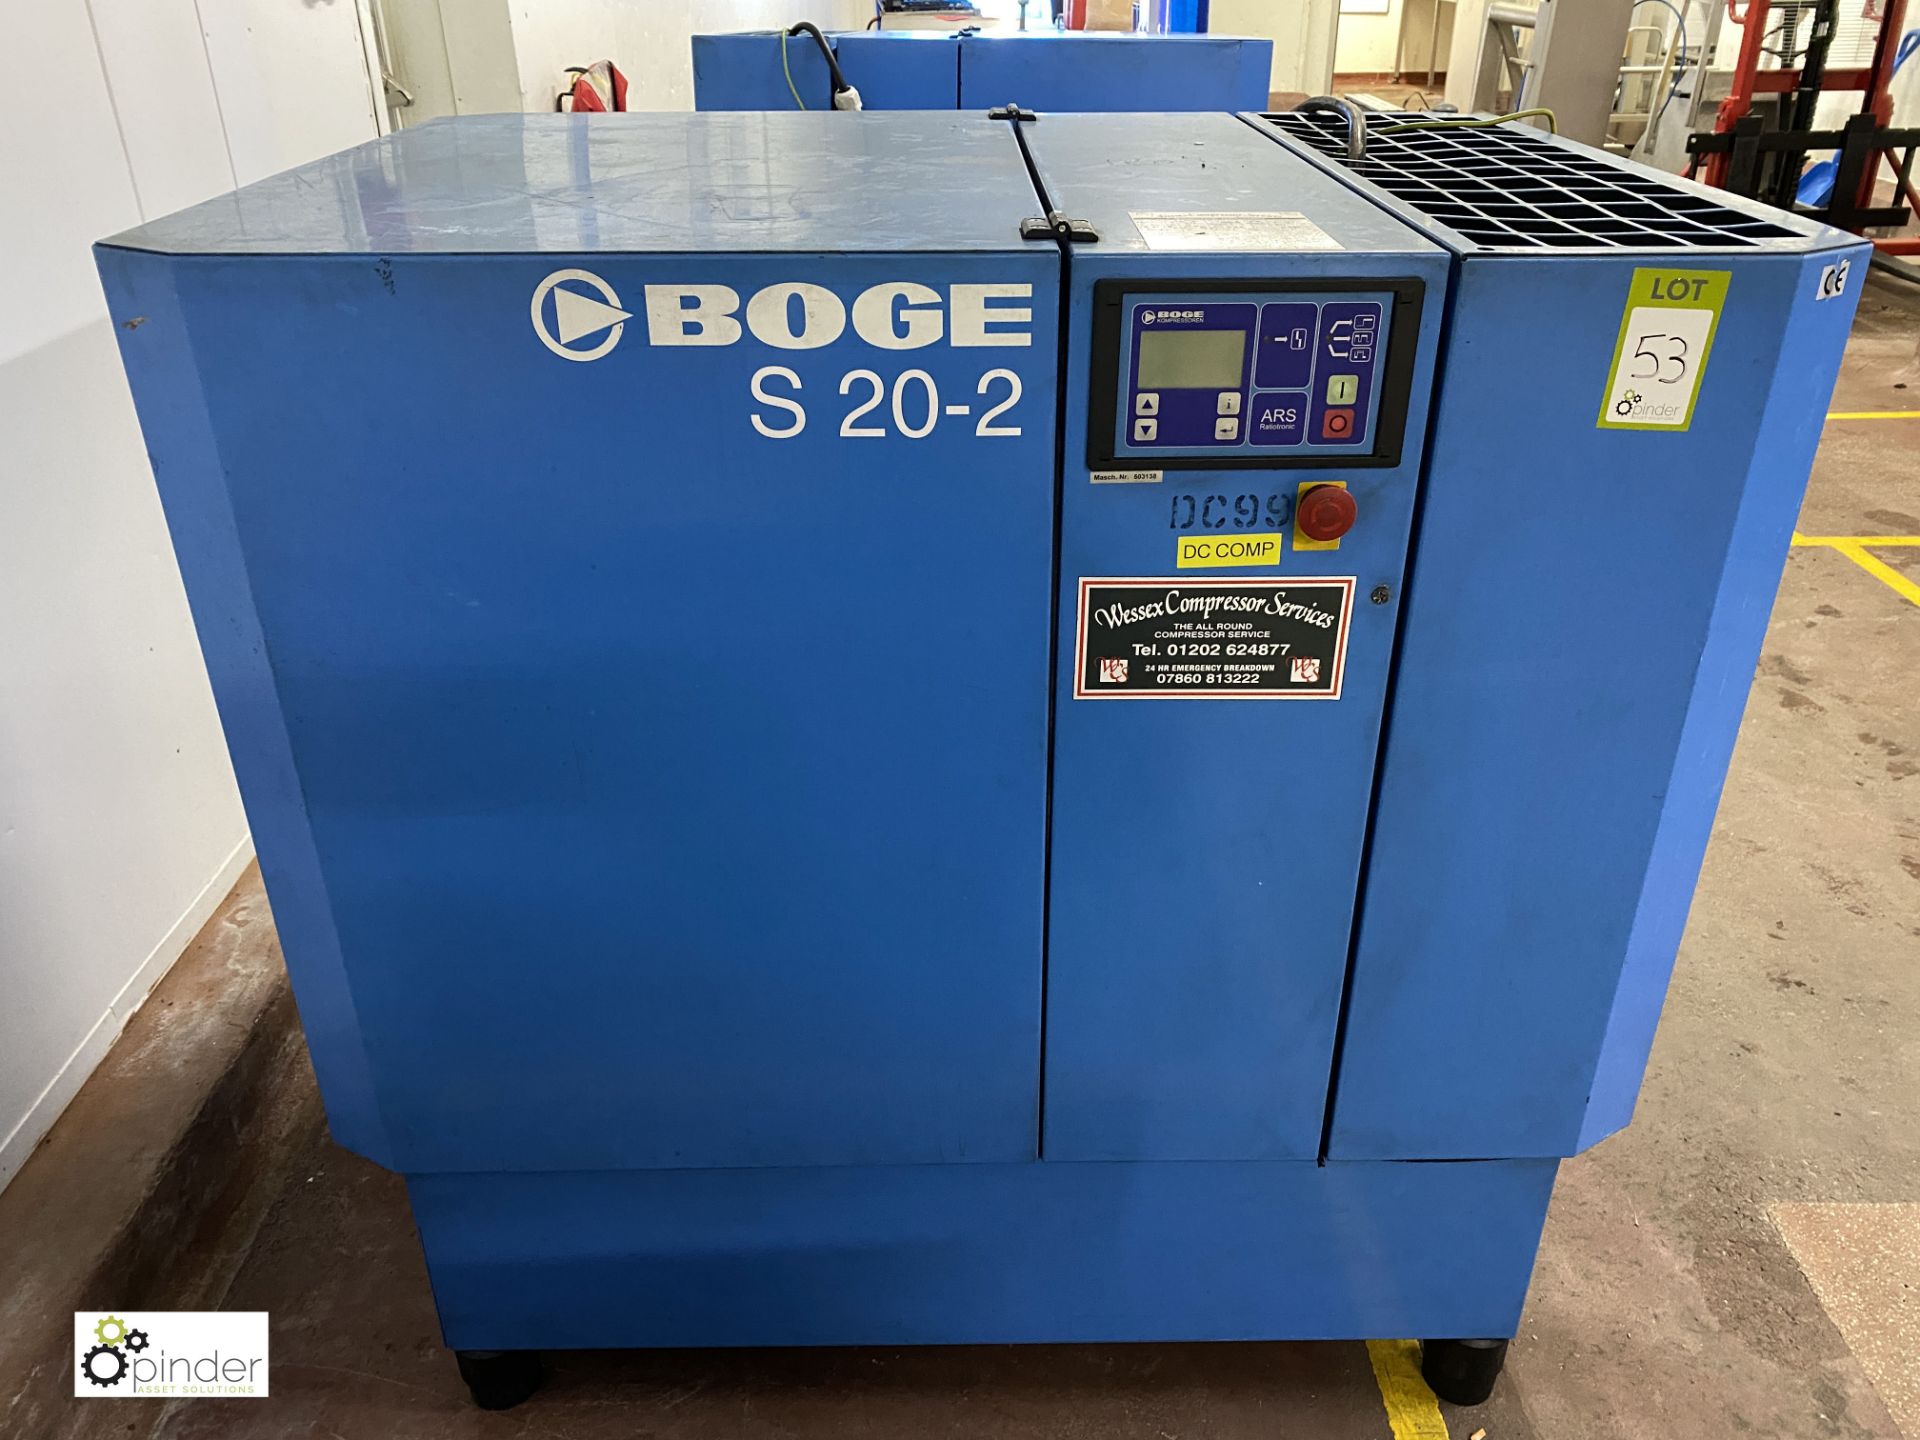 Boge S20-2 Packaged Air Compressor, swp 10bar, 15kw motor, year 2004, serial number 503138,